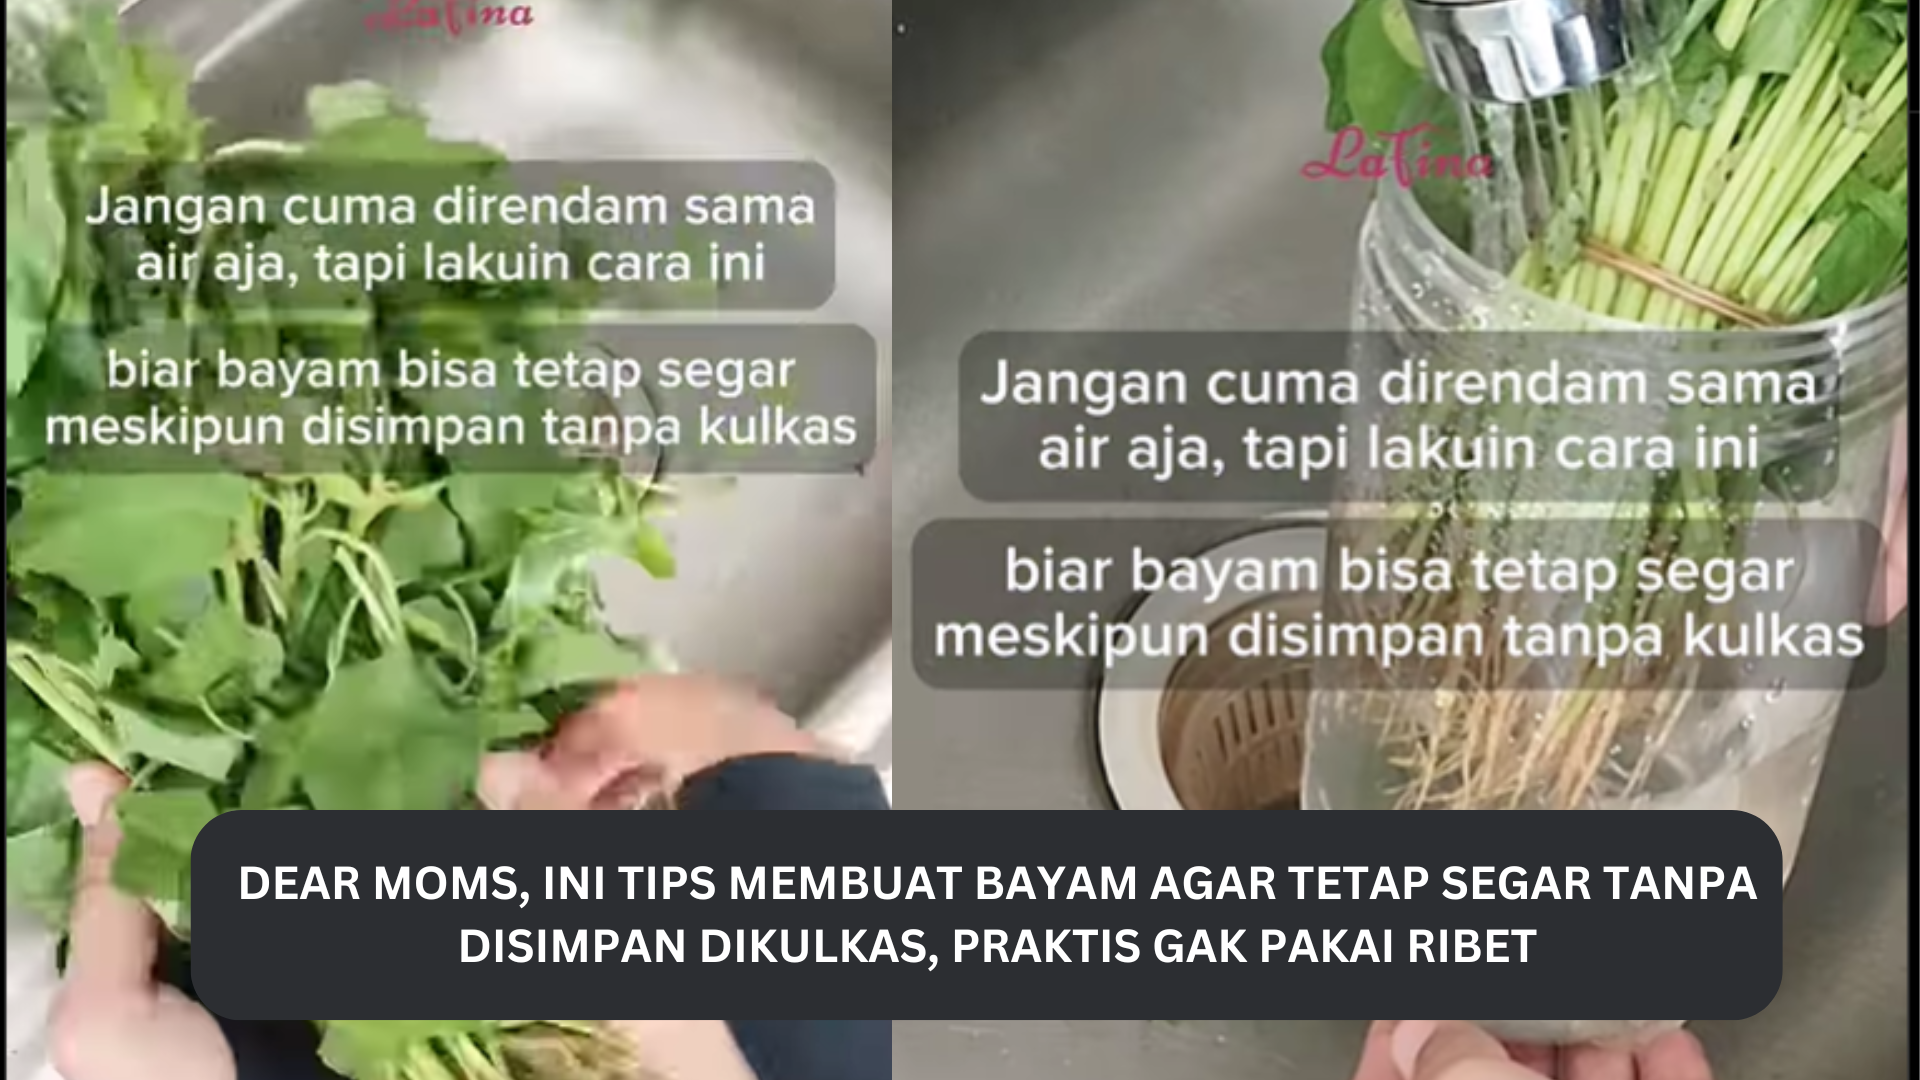 Dear Moms, Ini Tips Membuat Sayur Bayam Tetap Segar Tanpa Disimpan Dikulkas, Praktis Gak Pakai Ribet 